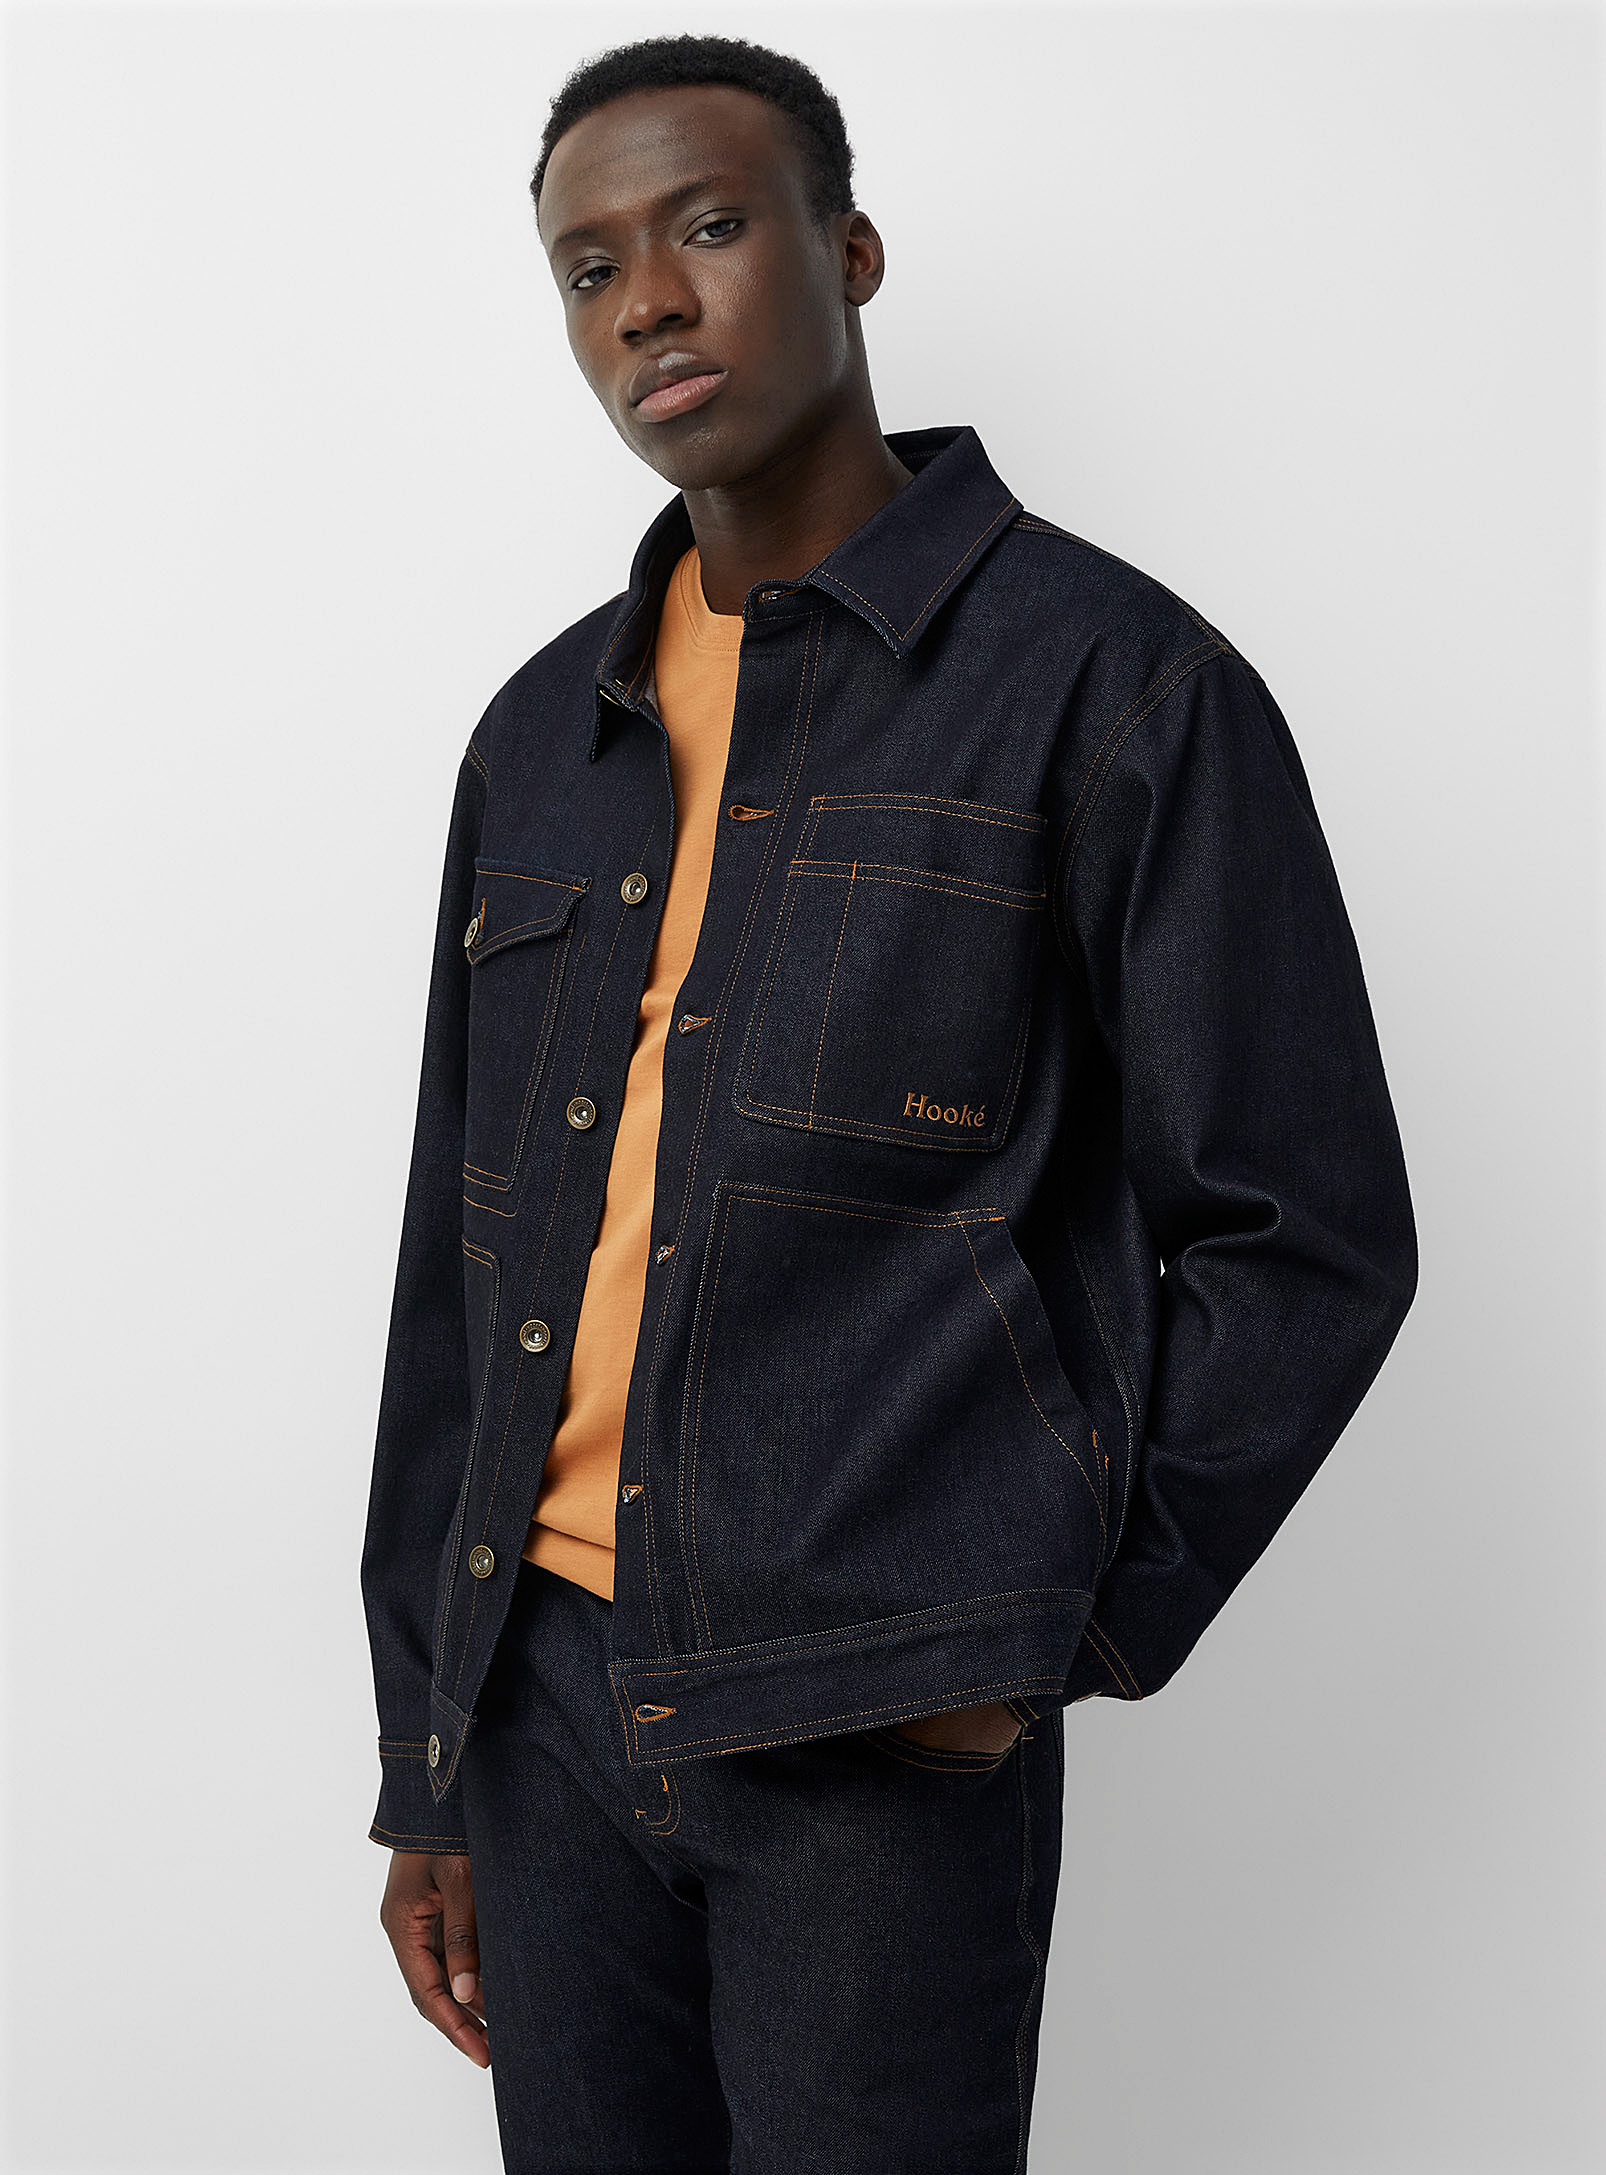 Hooké - Men's Trucker workwear denim jacket